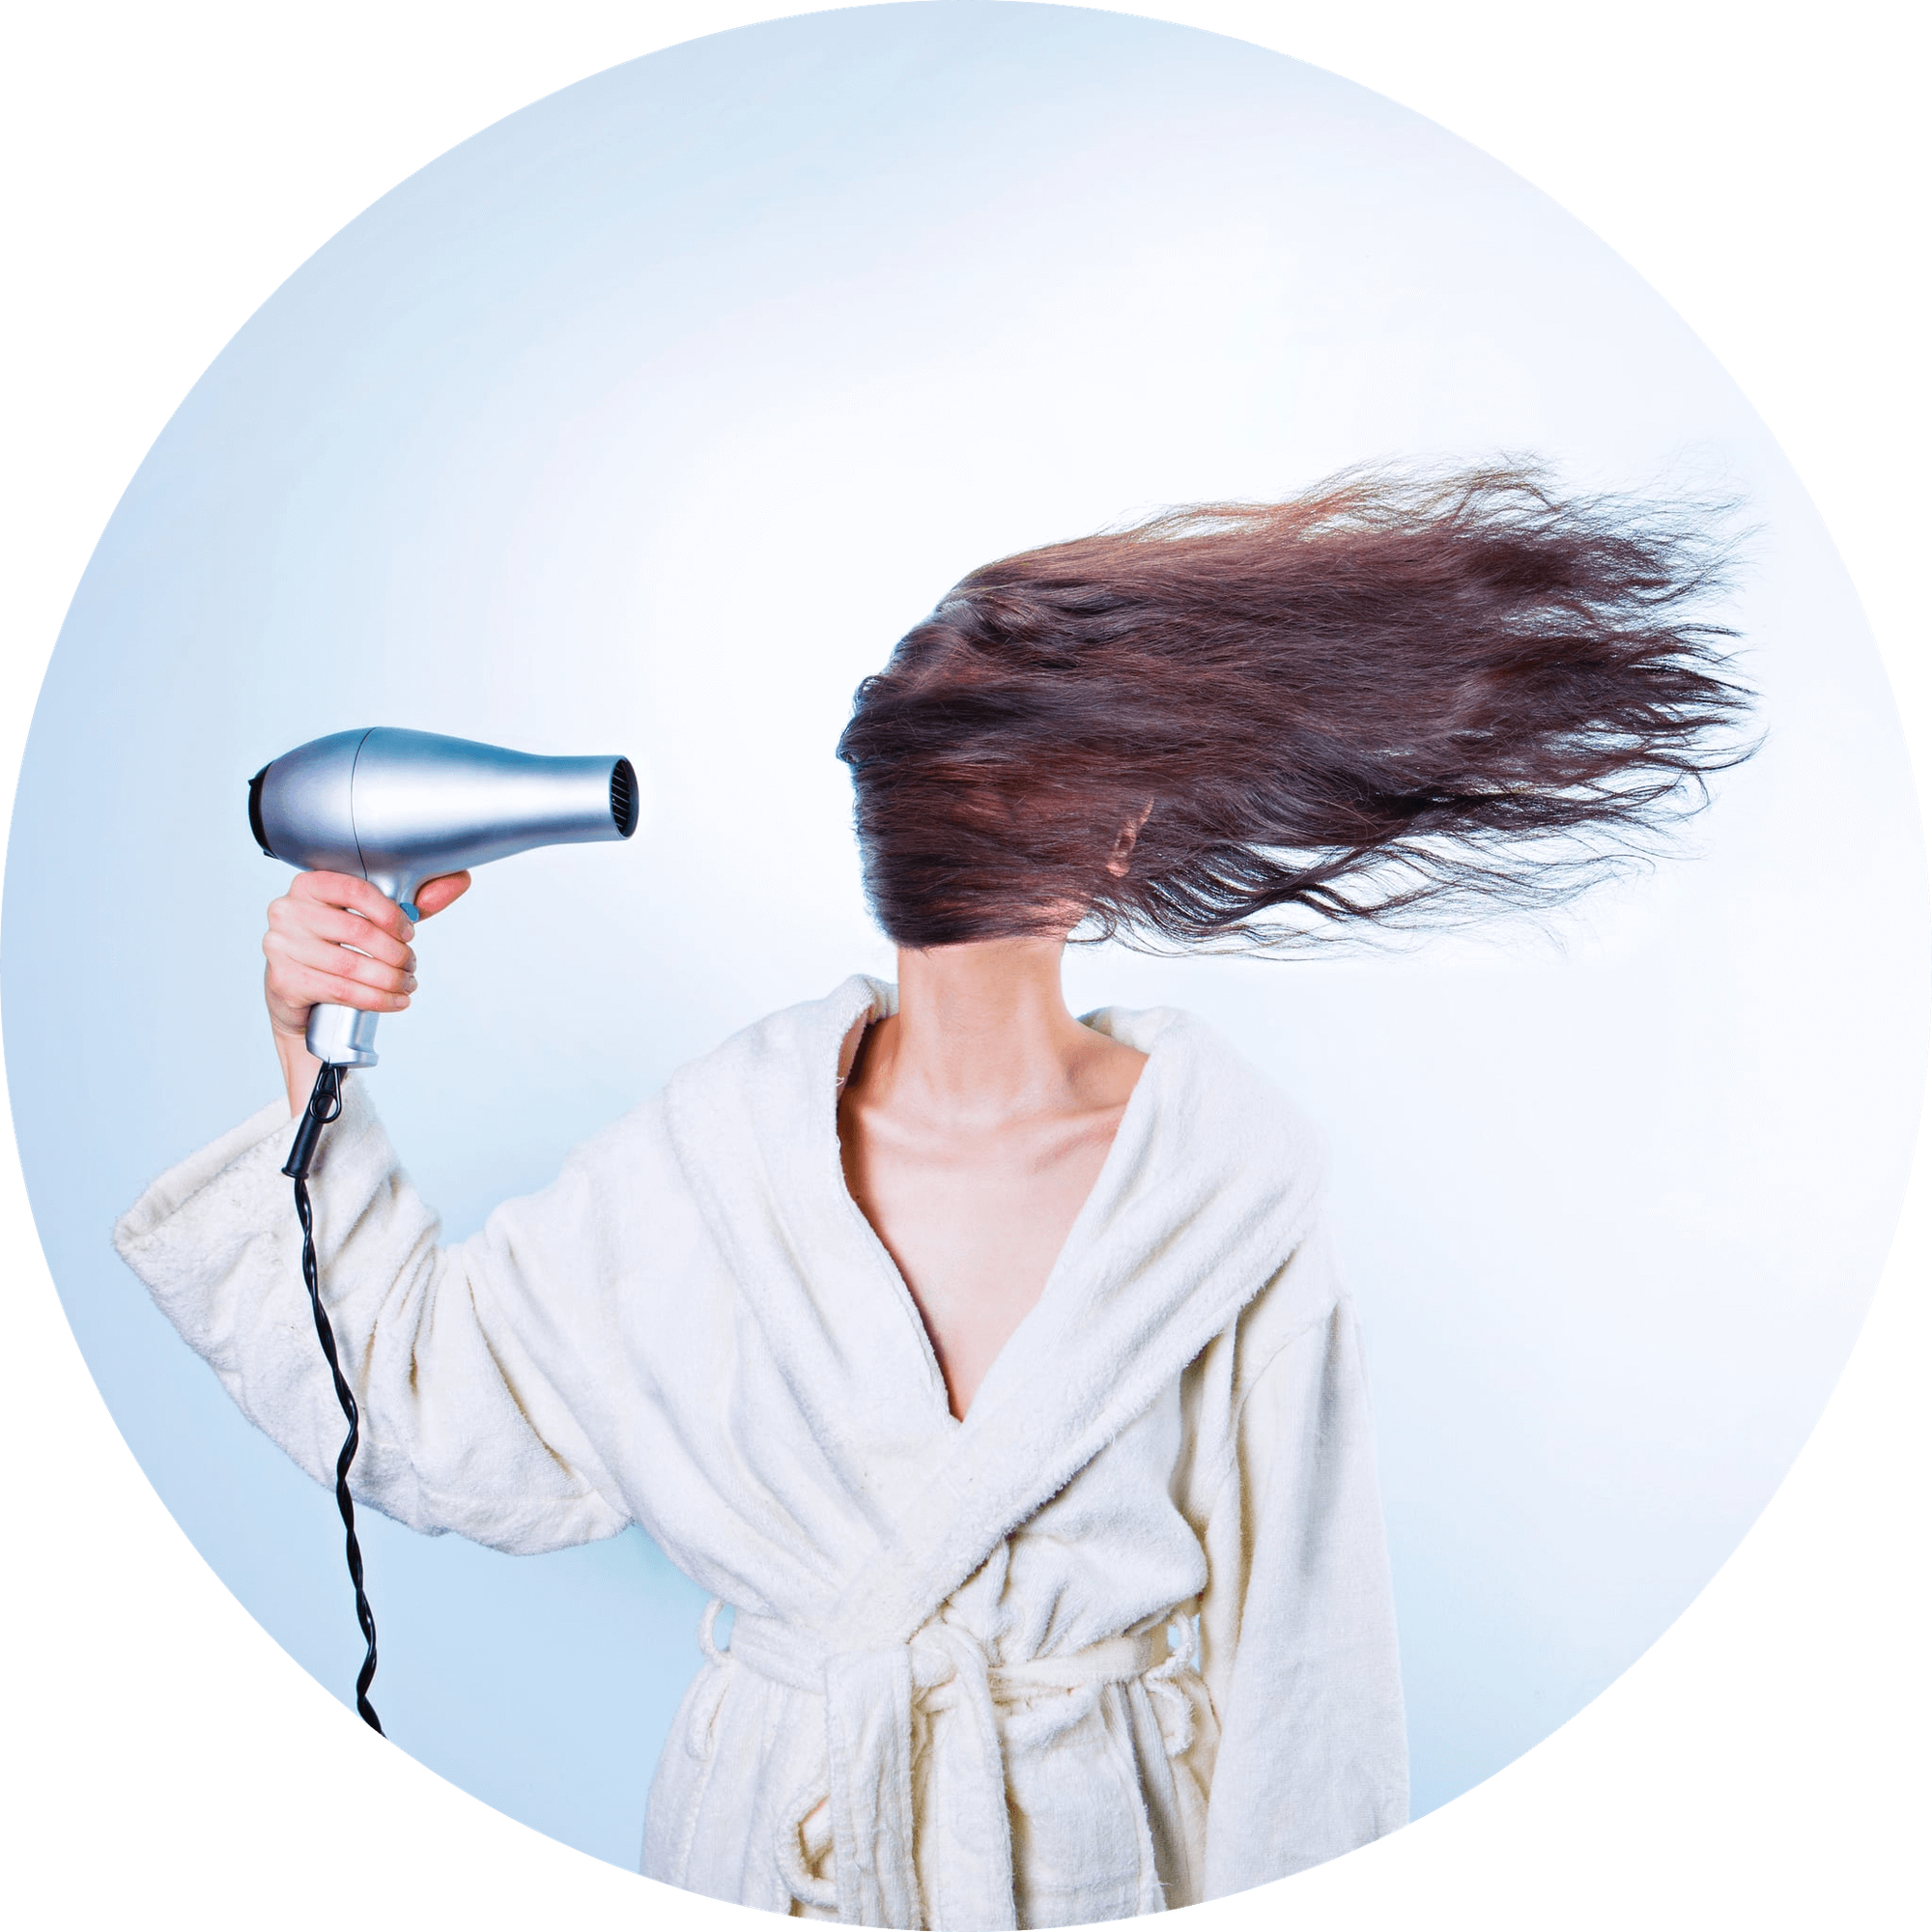 10 MYTHS ABOUT HAIR LOSS